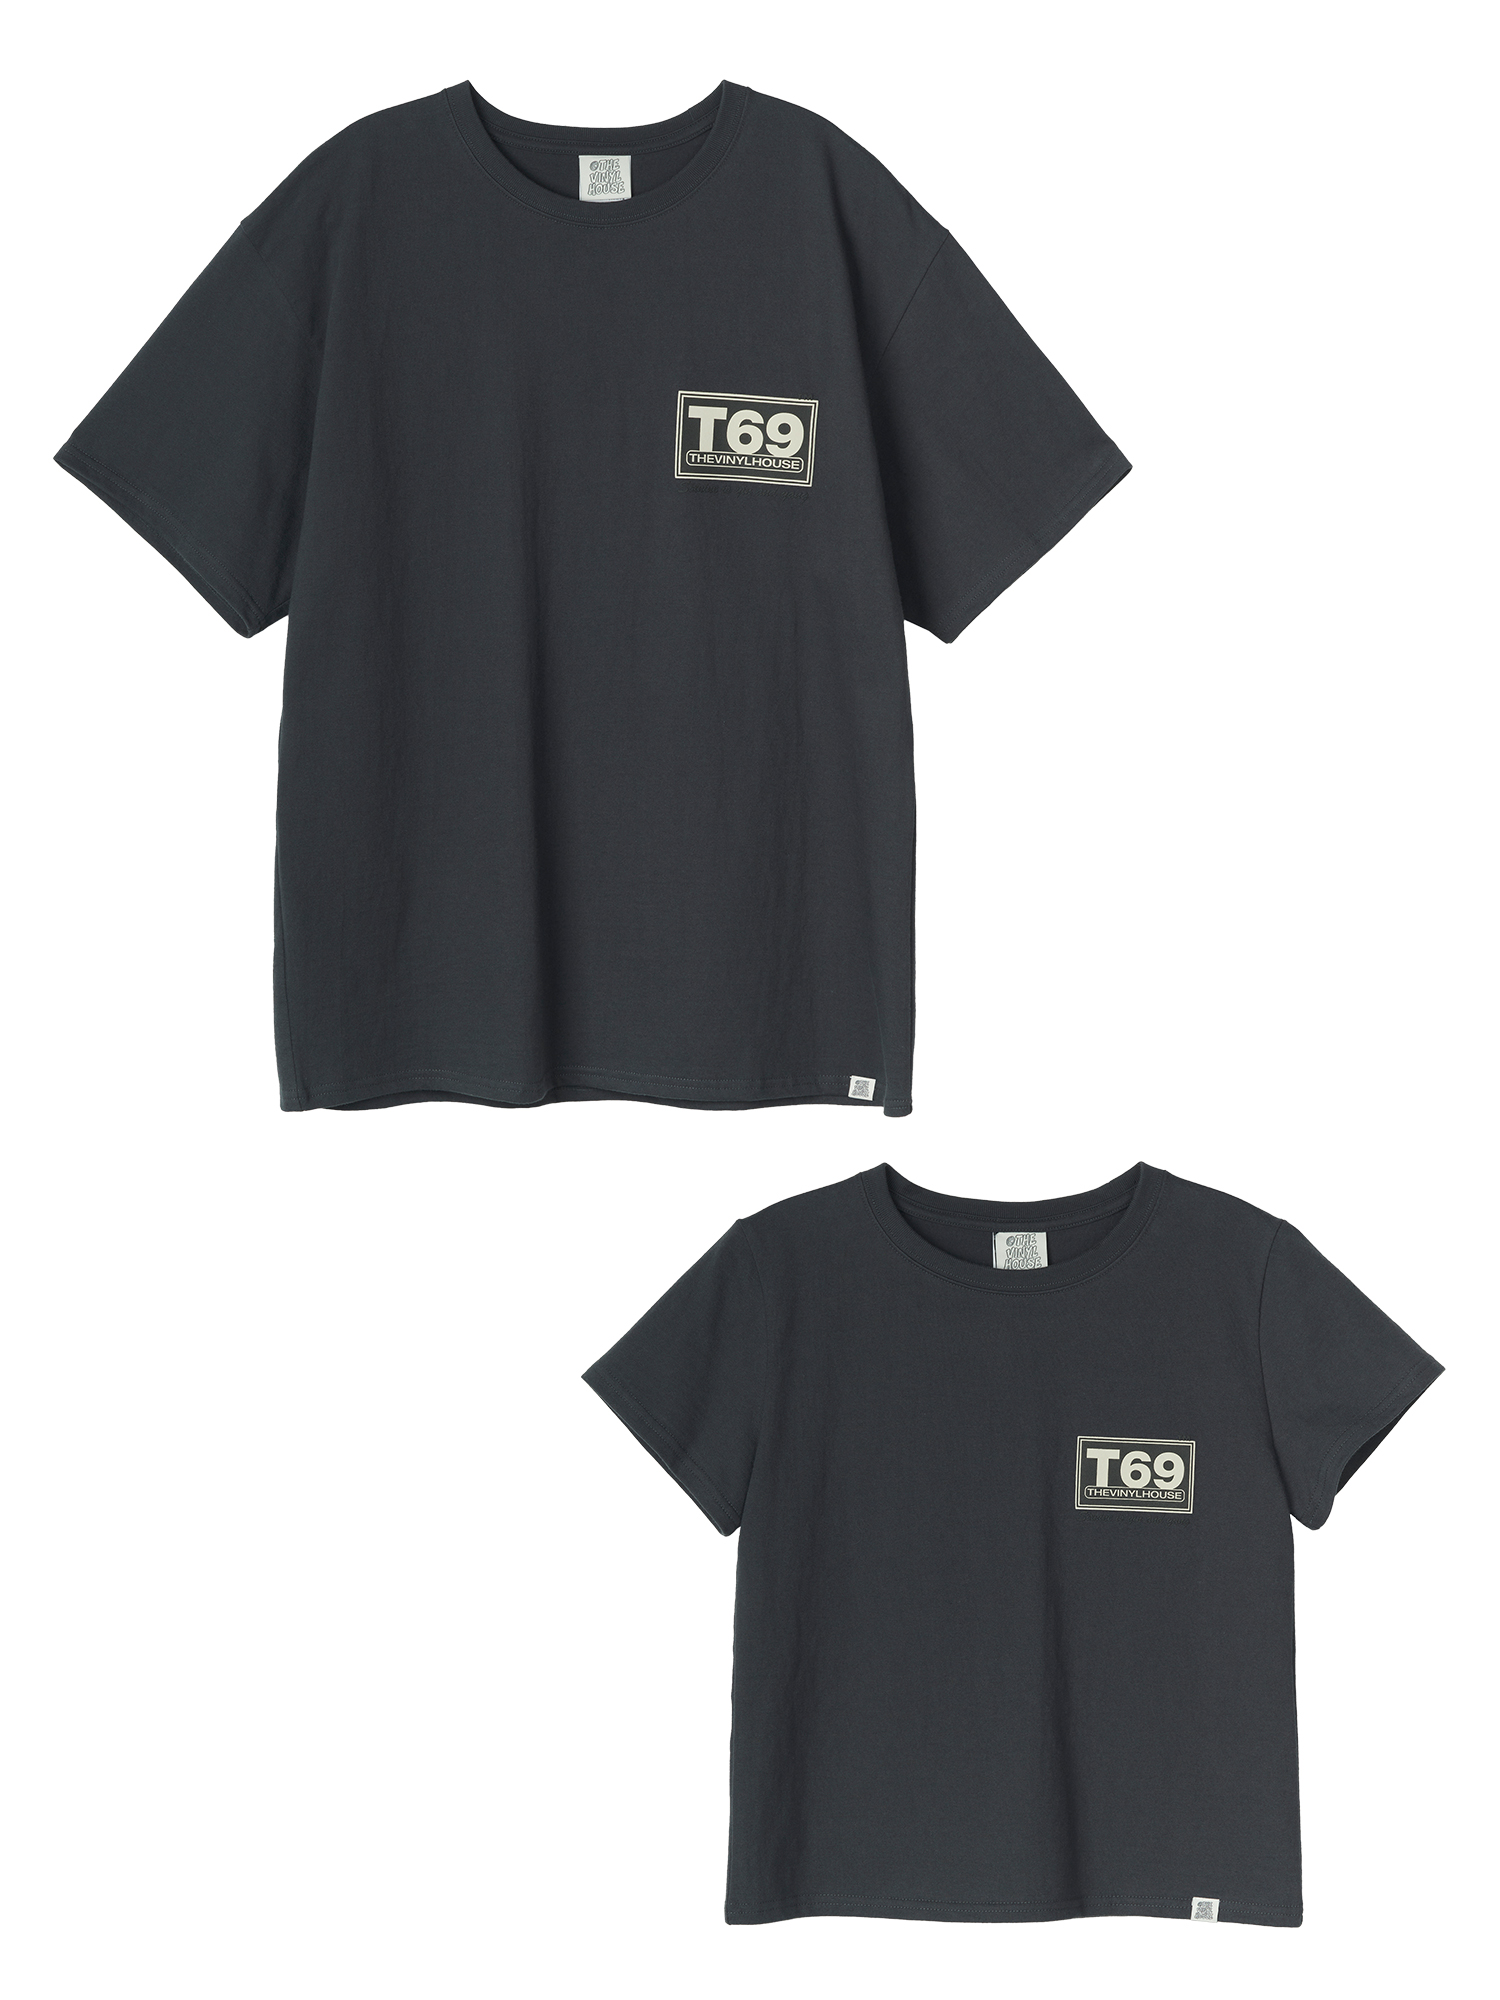 T69 Tee - Charcoal